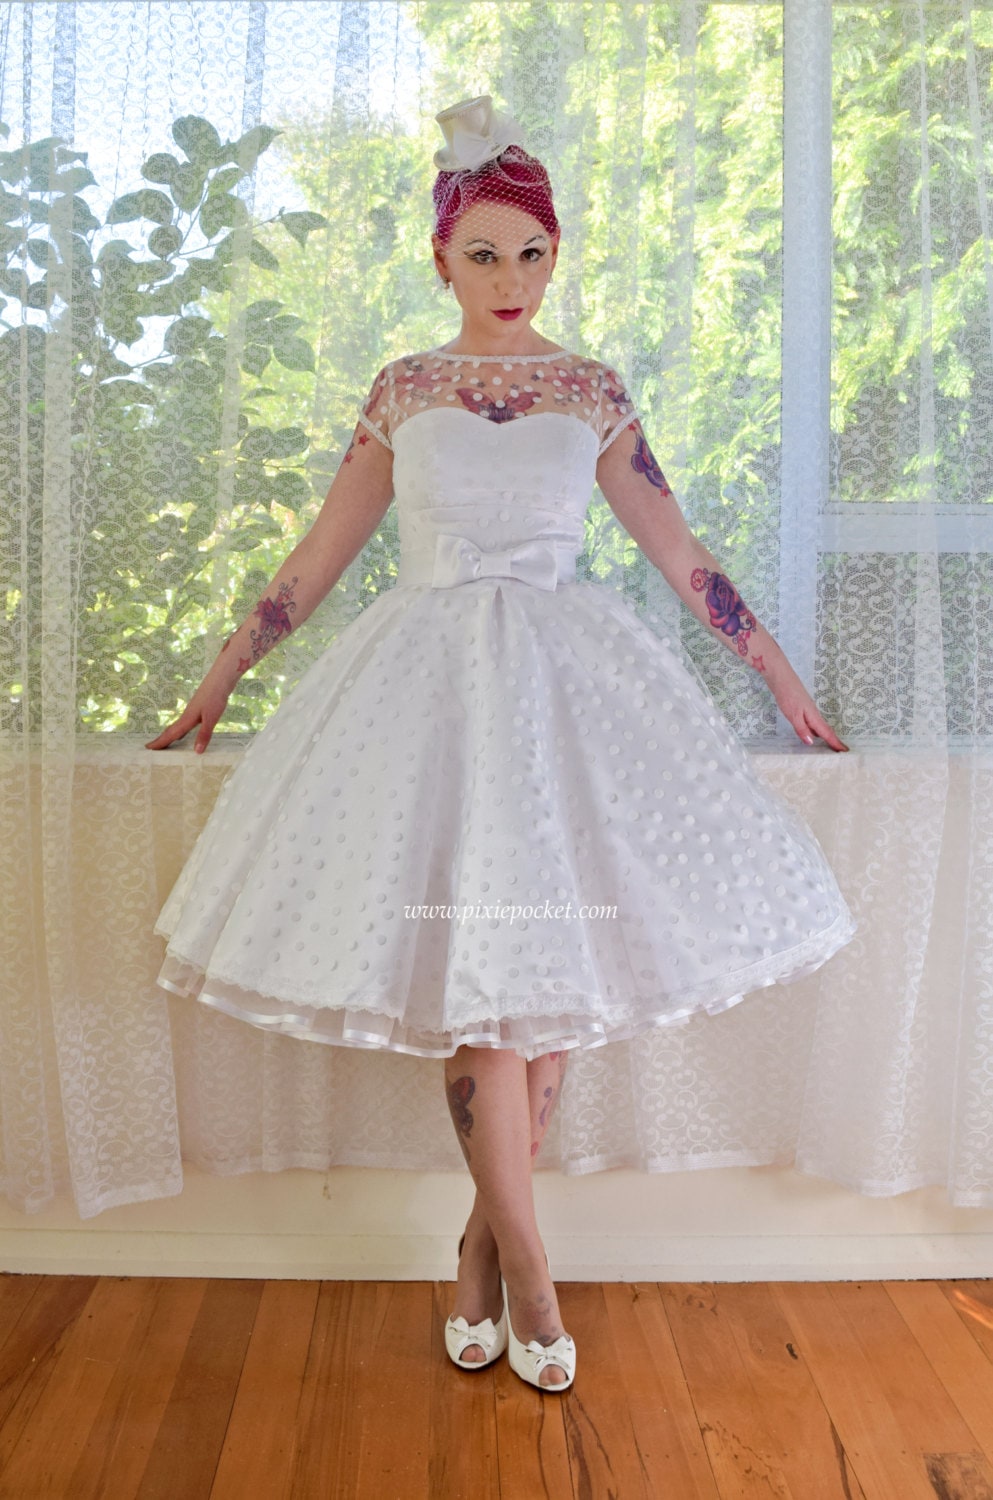 Ivory 8's 'Mary Jane' Style Wedding Dress with Polka Dot Overlay,  Sweetheart Neckline, Tea Length Skirt & Petticoat   Custom made to fit